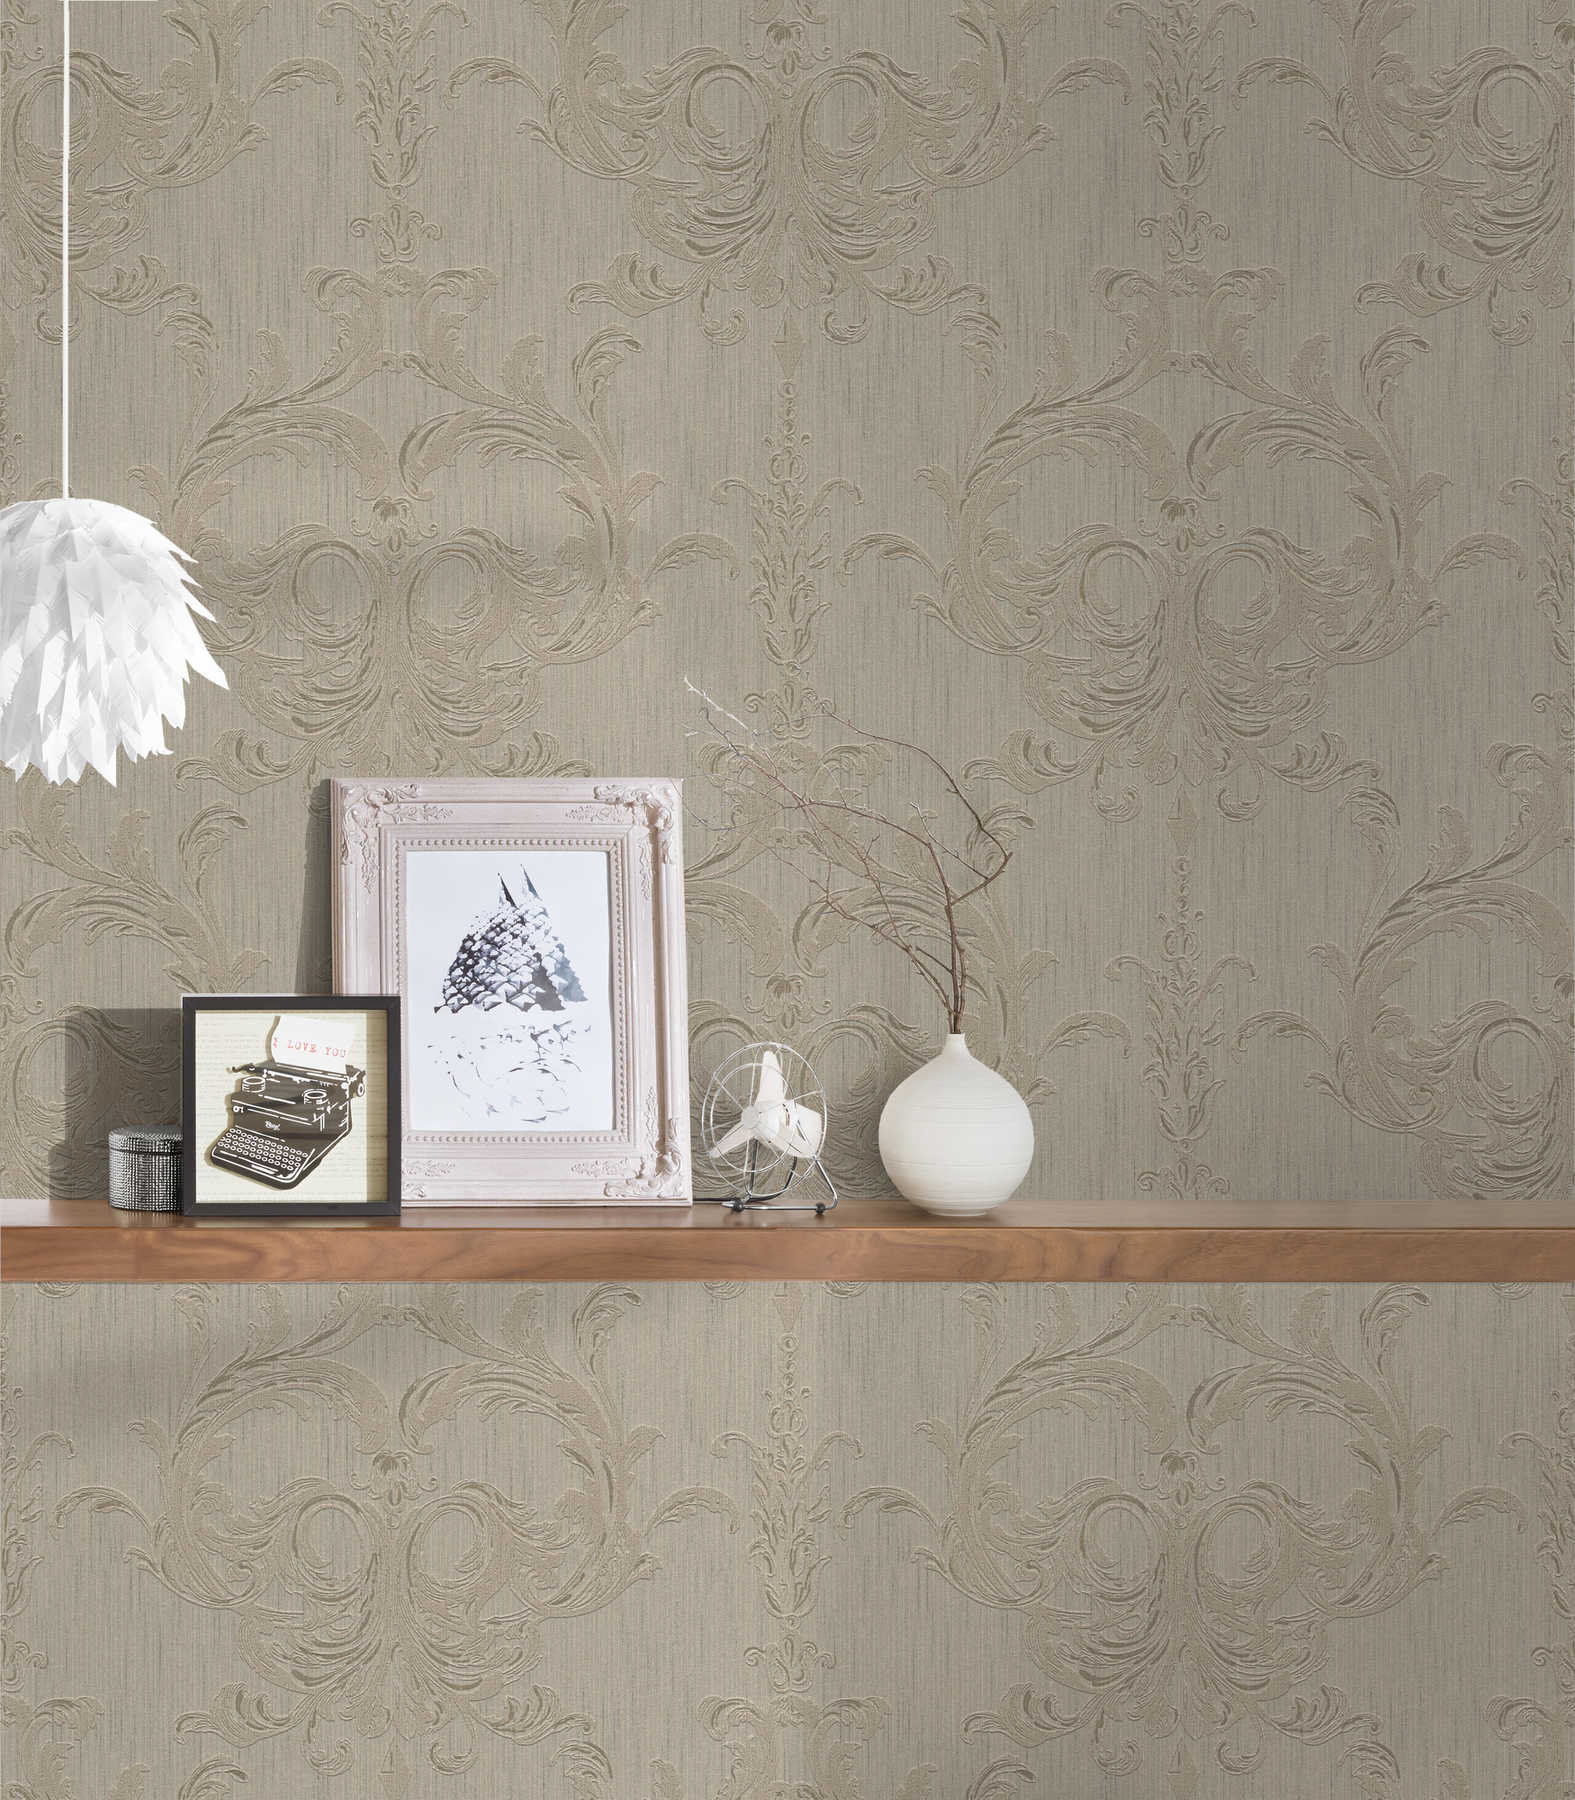             Elegant wallpaper with filigree ornament design - brown
        